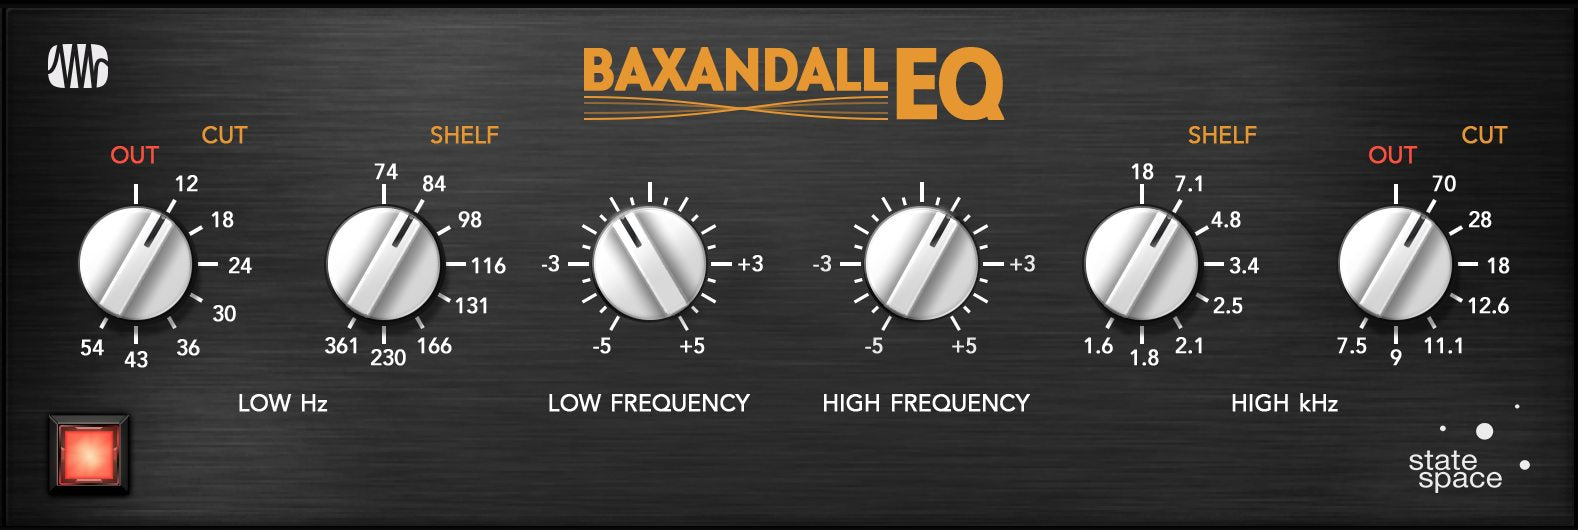 PreSonus Baxandall EQ Fat Channel Plug-in